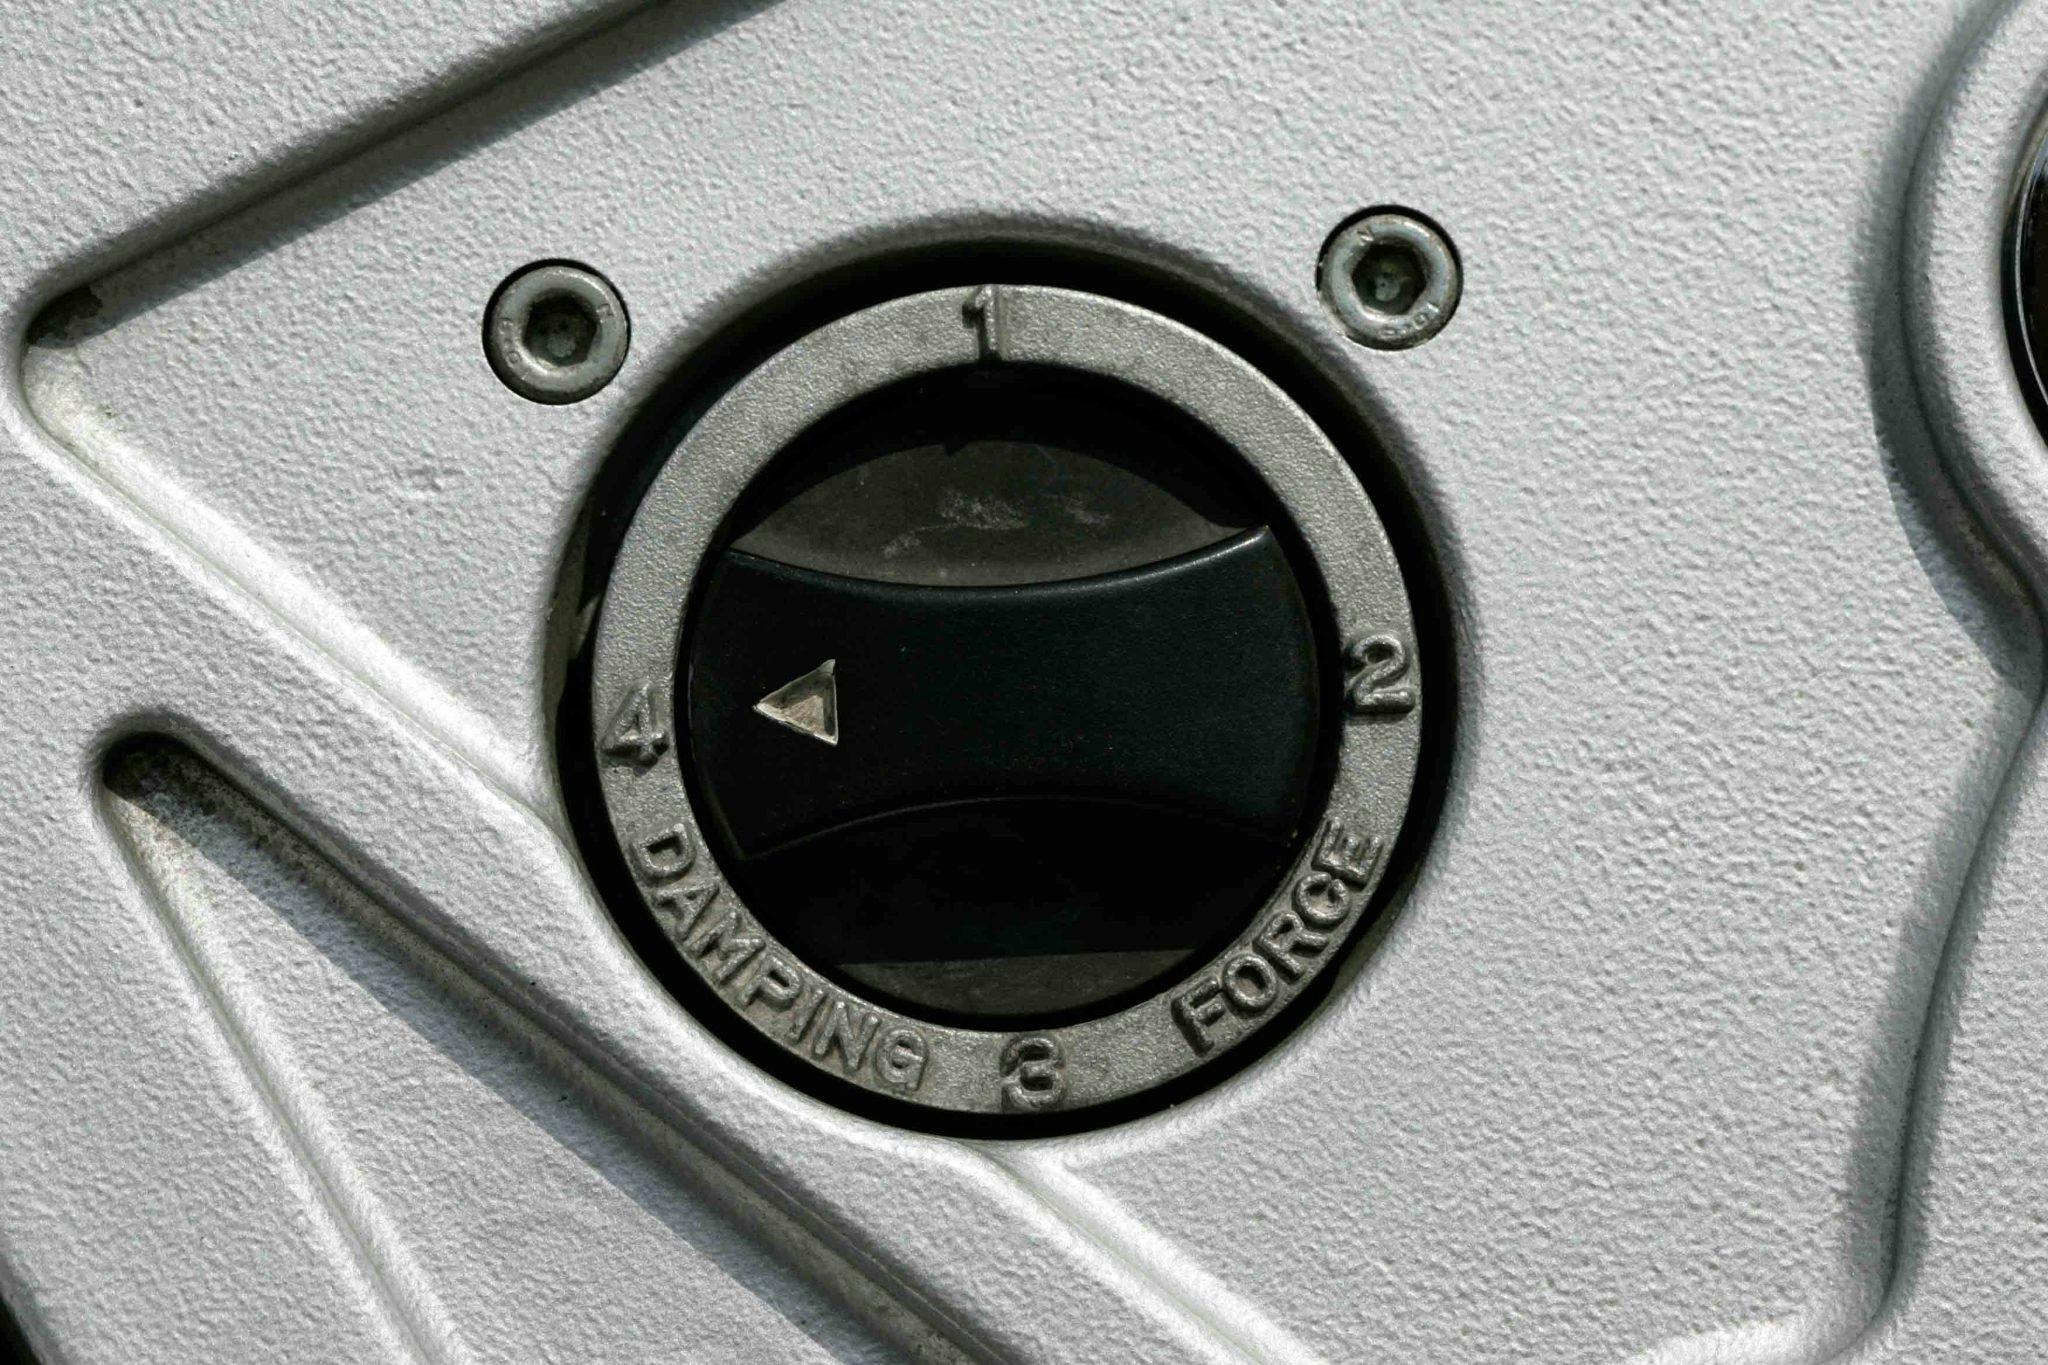 Kawasaki ZX-10 damping setting